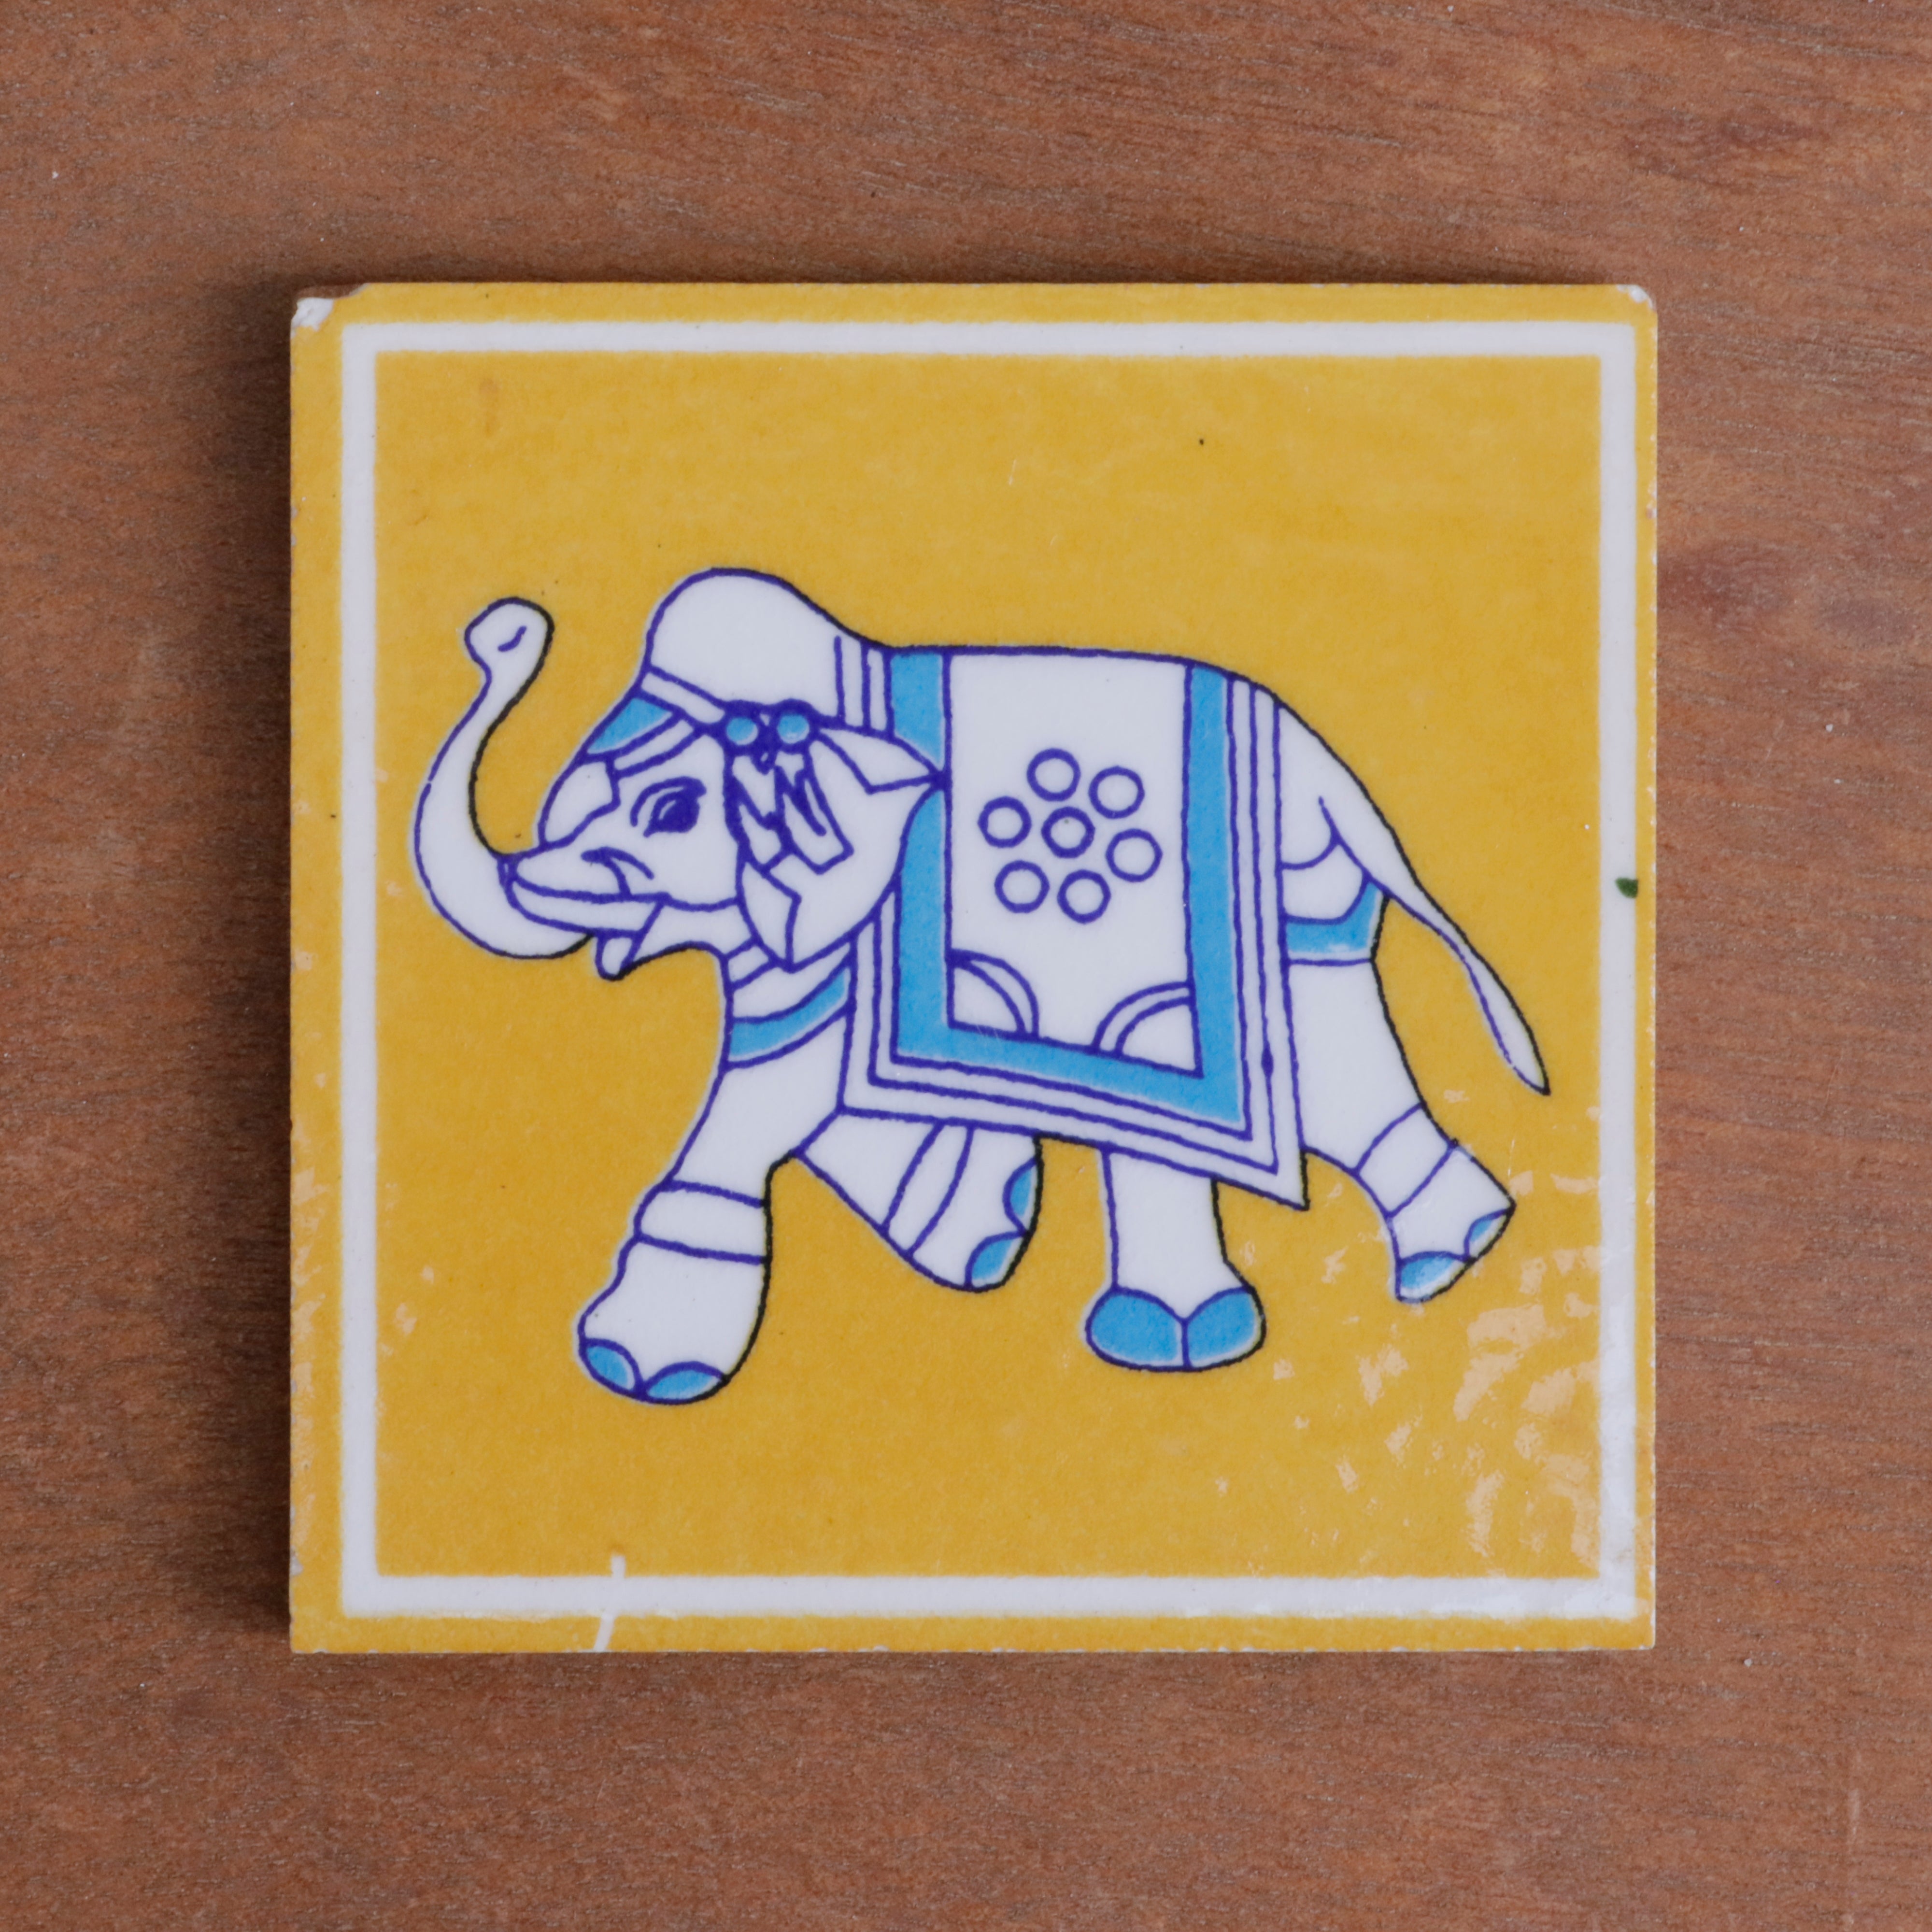 Charming Indian Style Elephant Designed Ceramic Square Tile Ceramic Tile